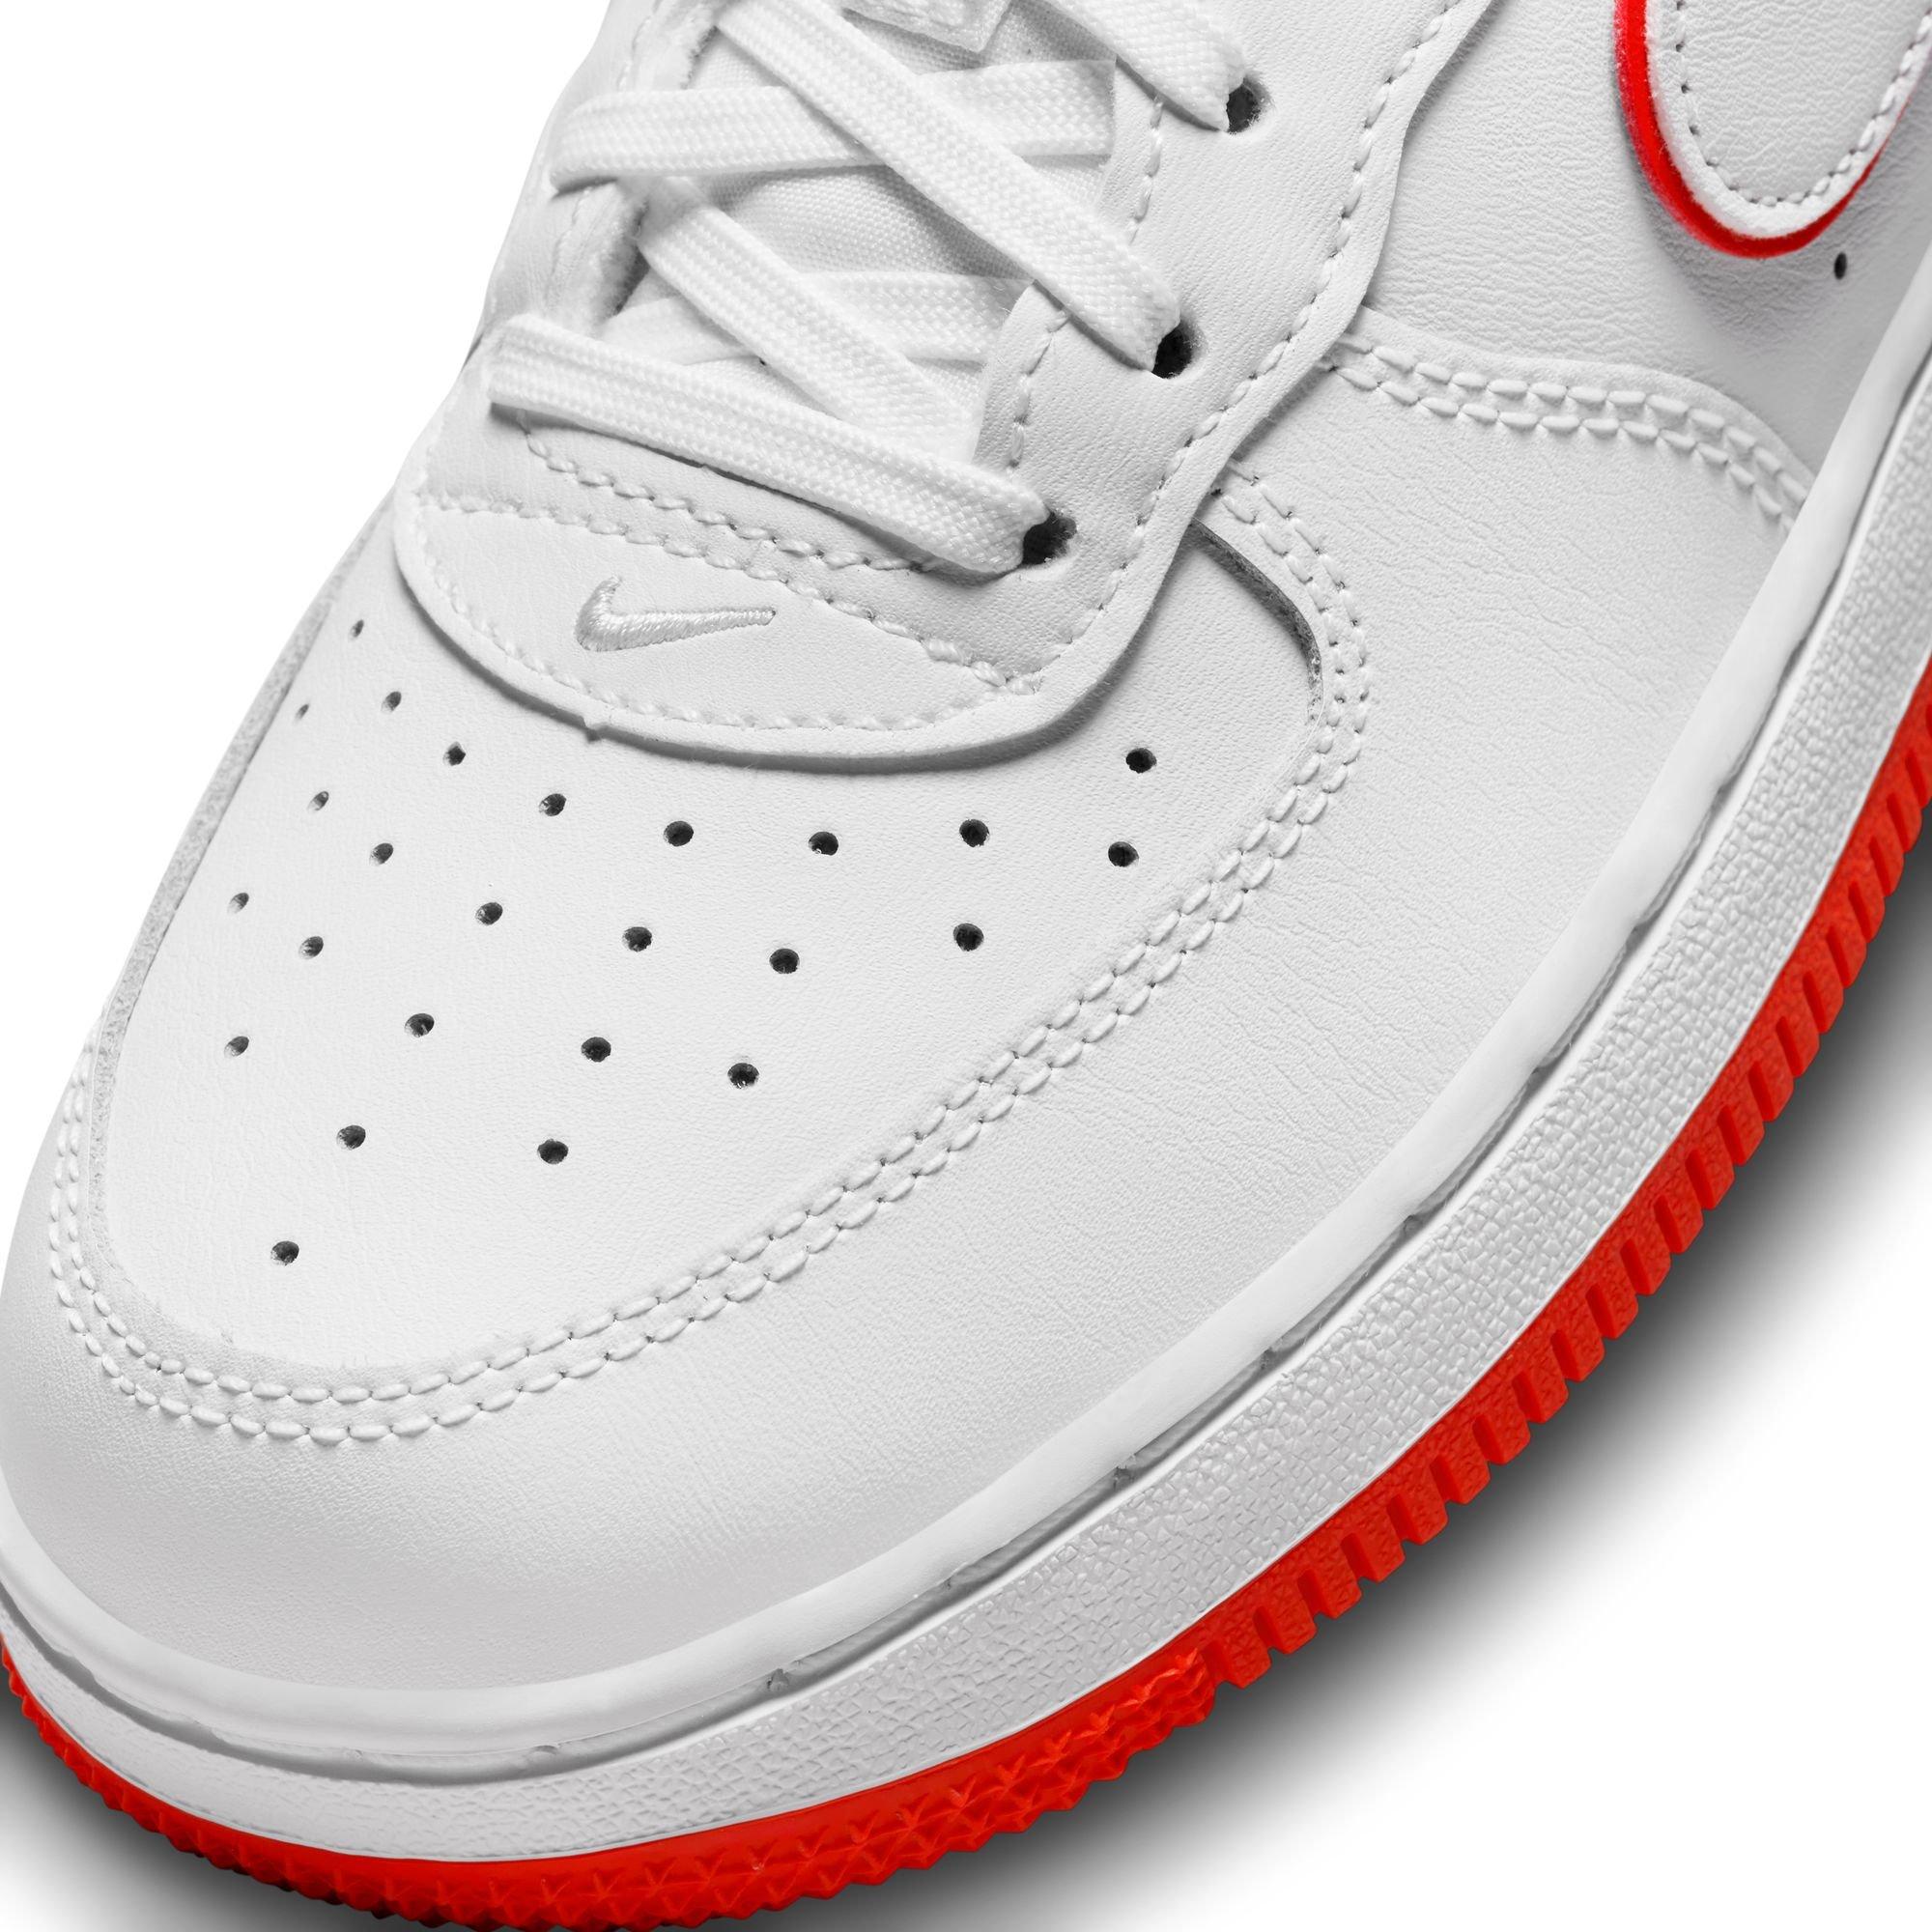 Nike Air Force 1 '07 Picante Red/White Men's Shoe - Hibbett